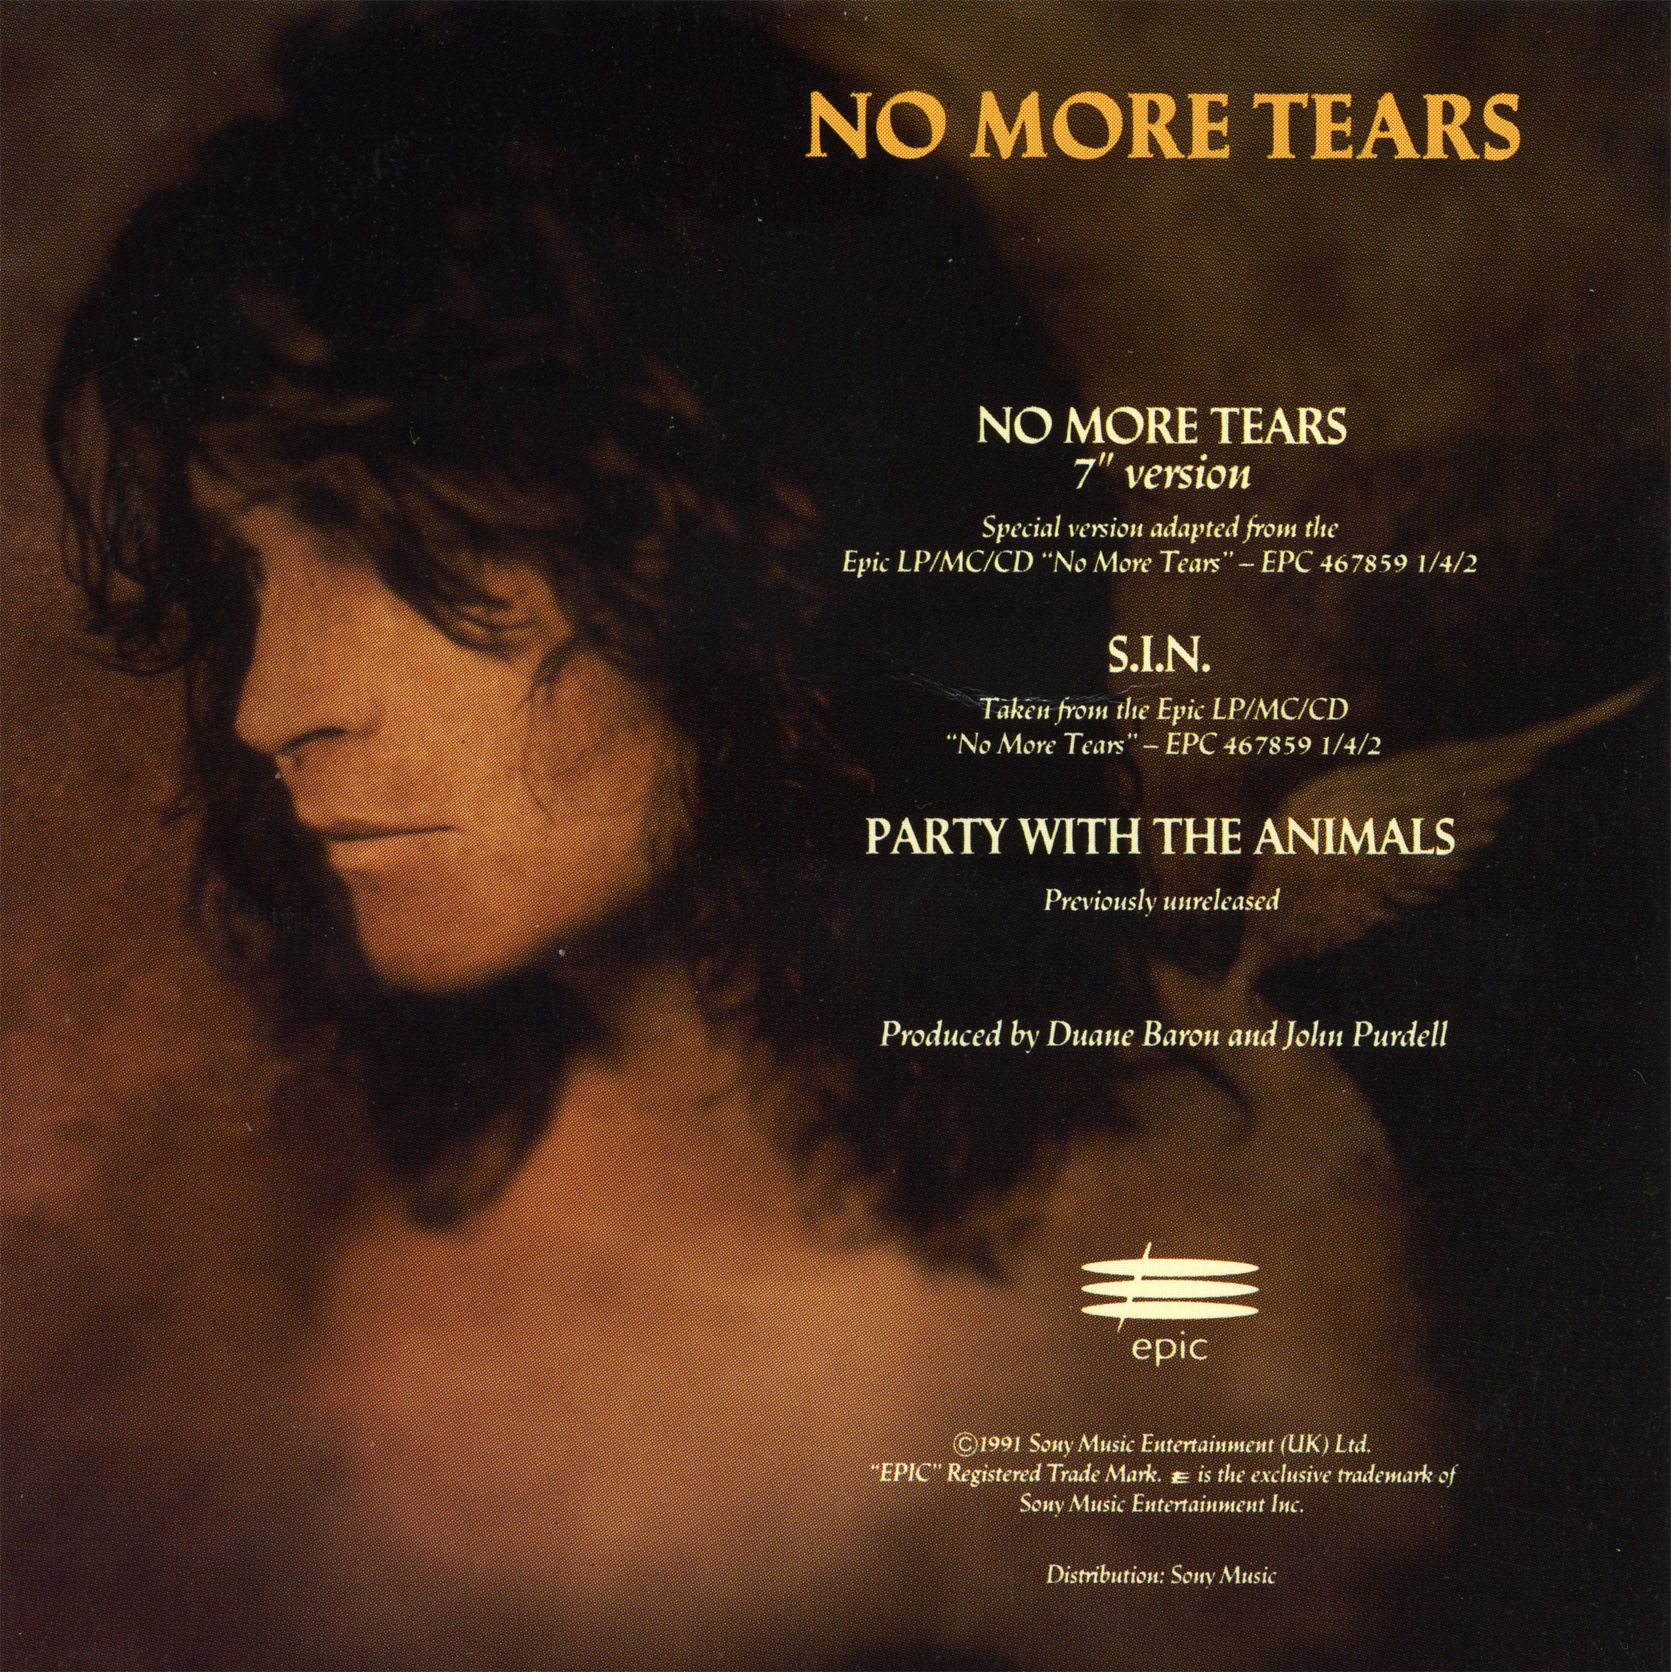 BlooD AnD HonoR MetaL: Ozzy Osbourne - No More Tears (1991) [Single]